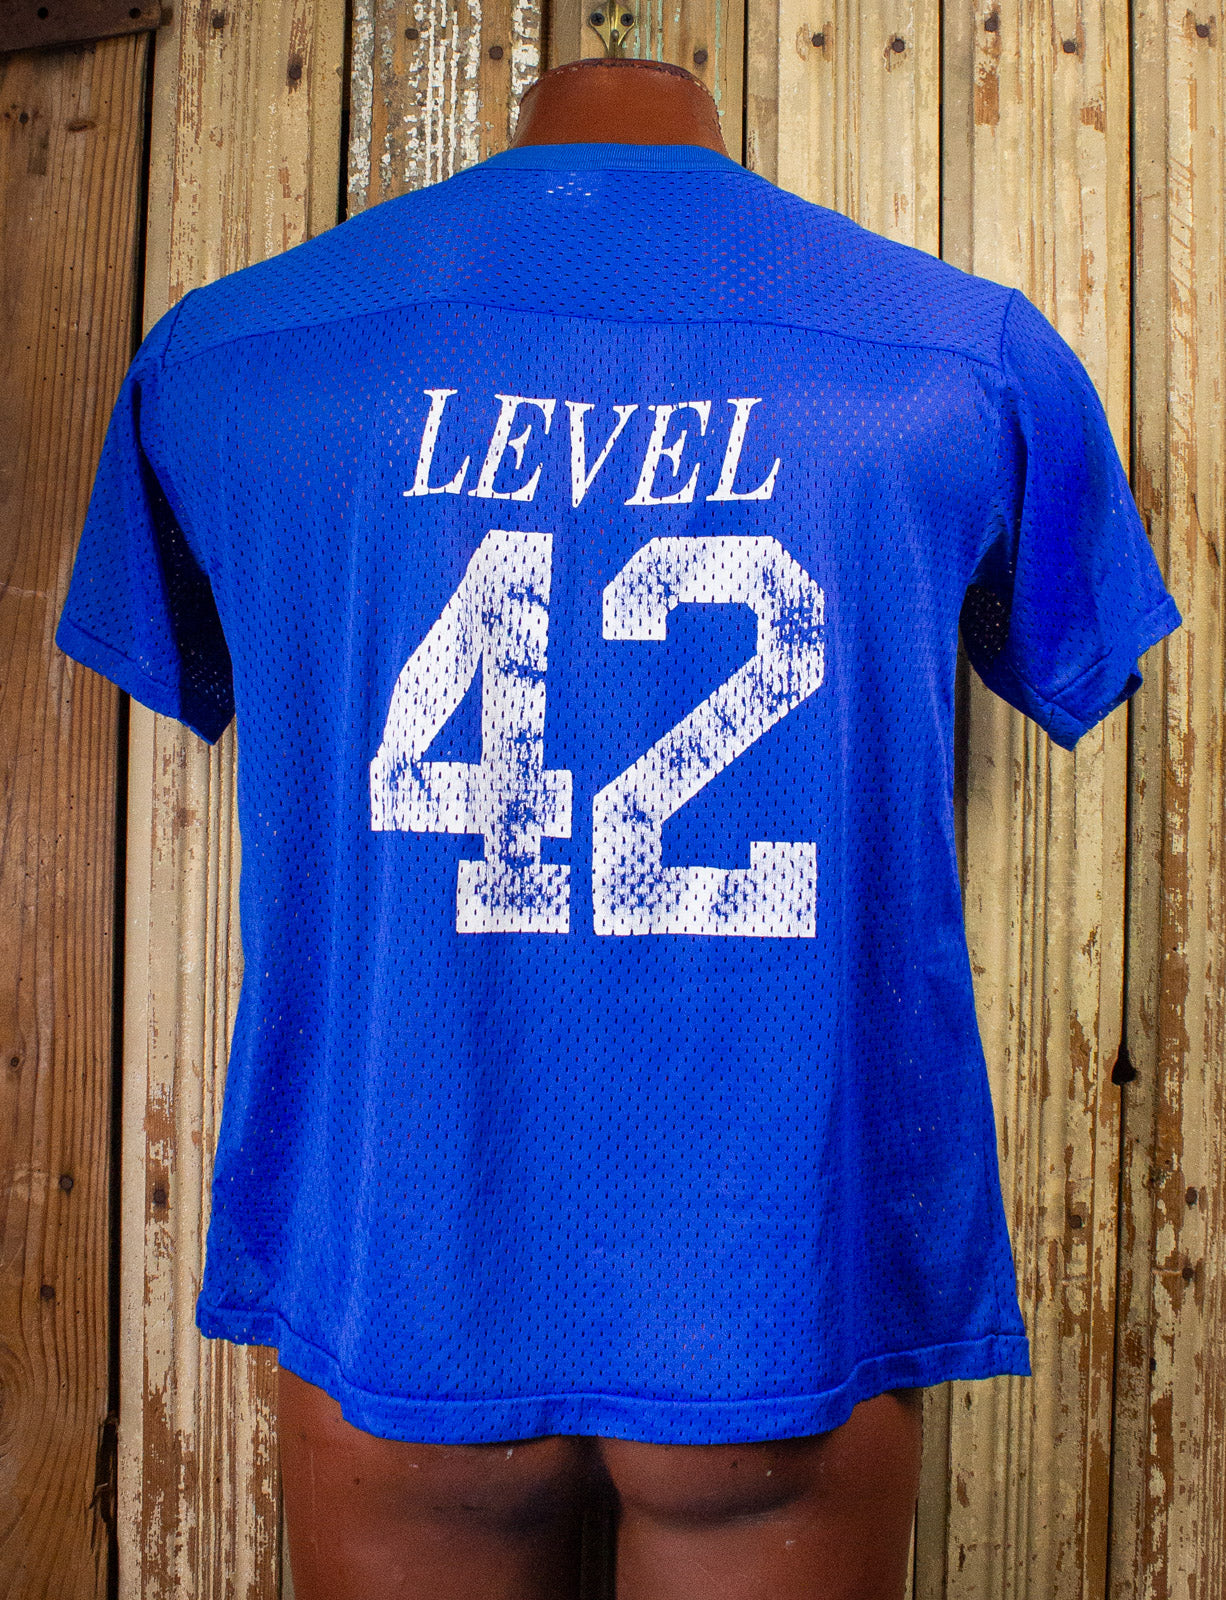 Vintage Level 42 Mesh Jersey Concert T Shirt 80s Blue Large